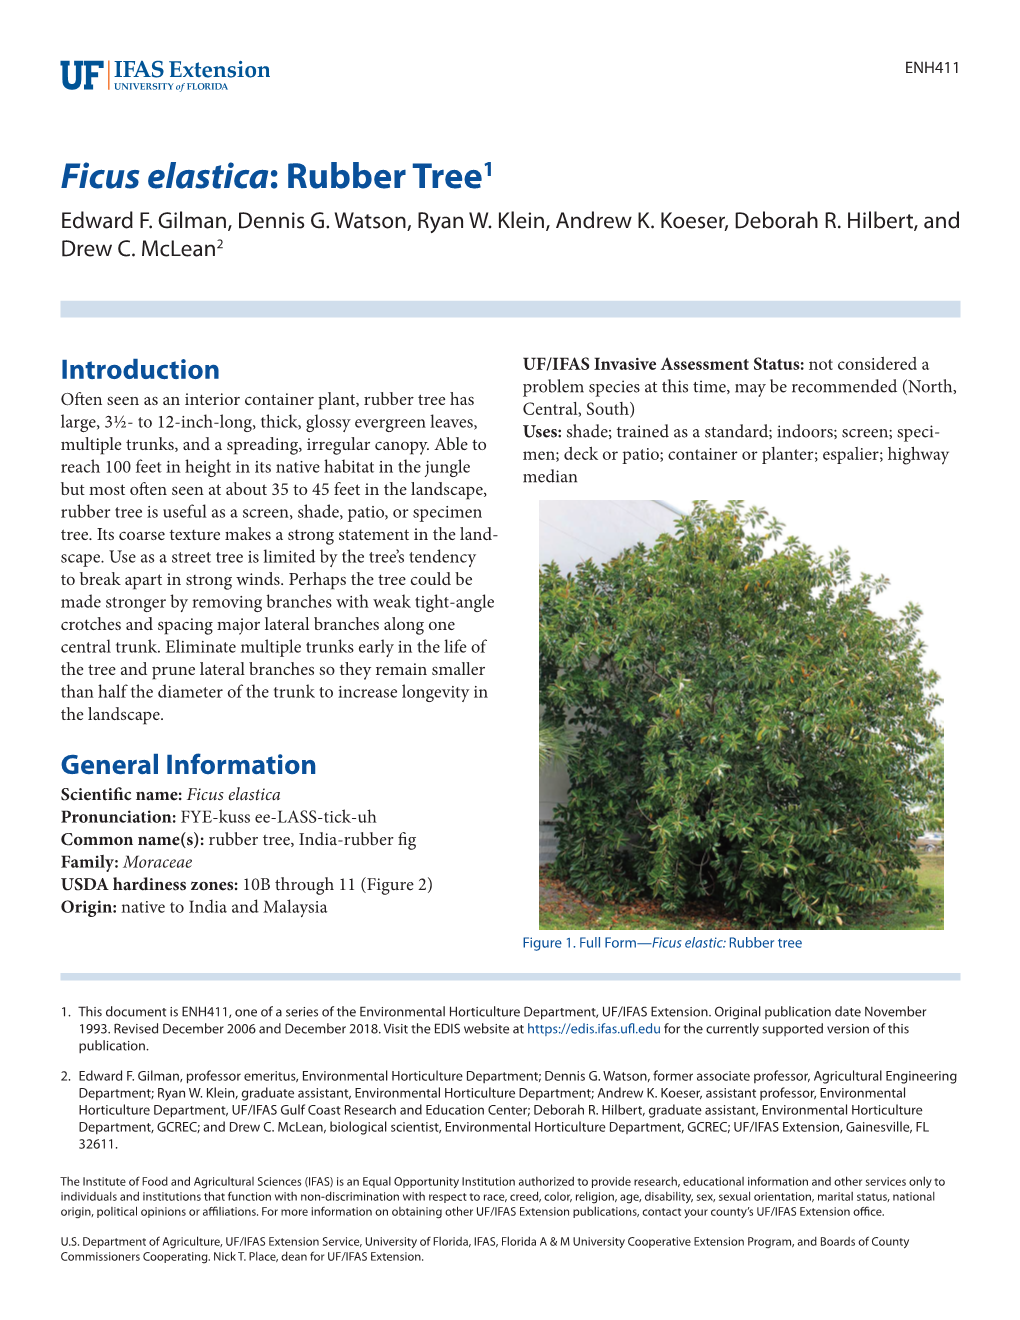 Ficus Elastica: Rubber Tree1 Edward F